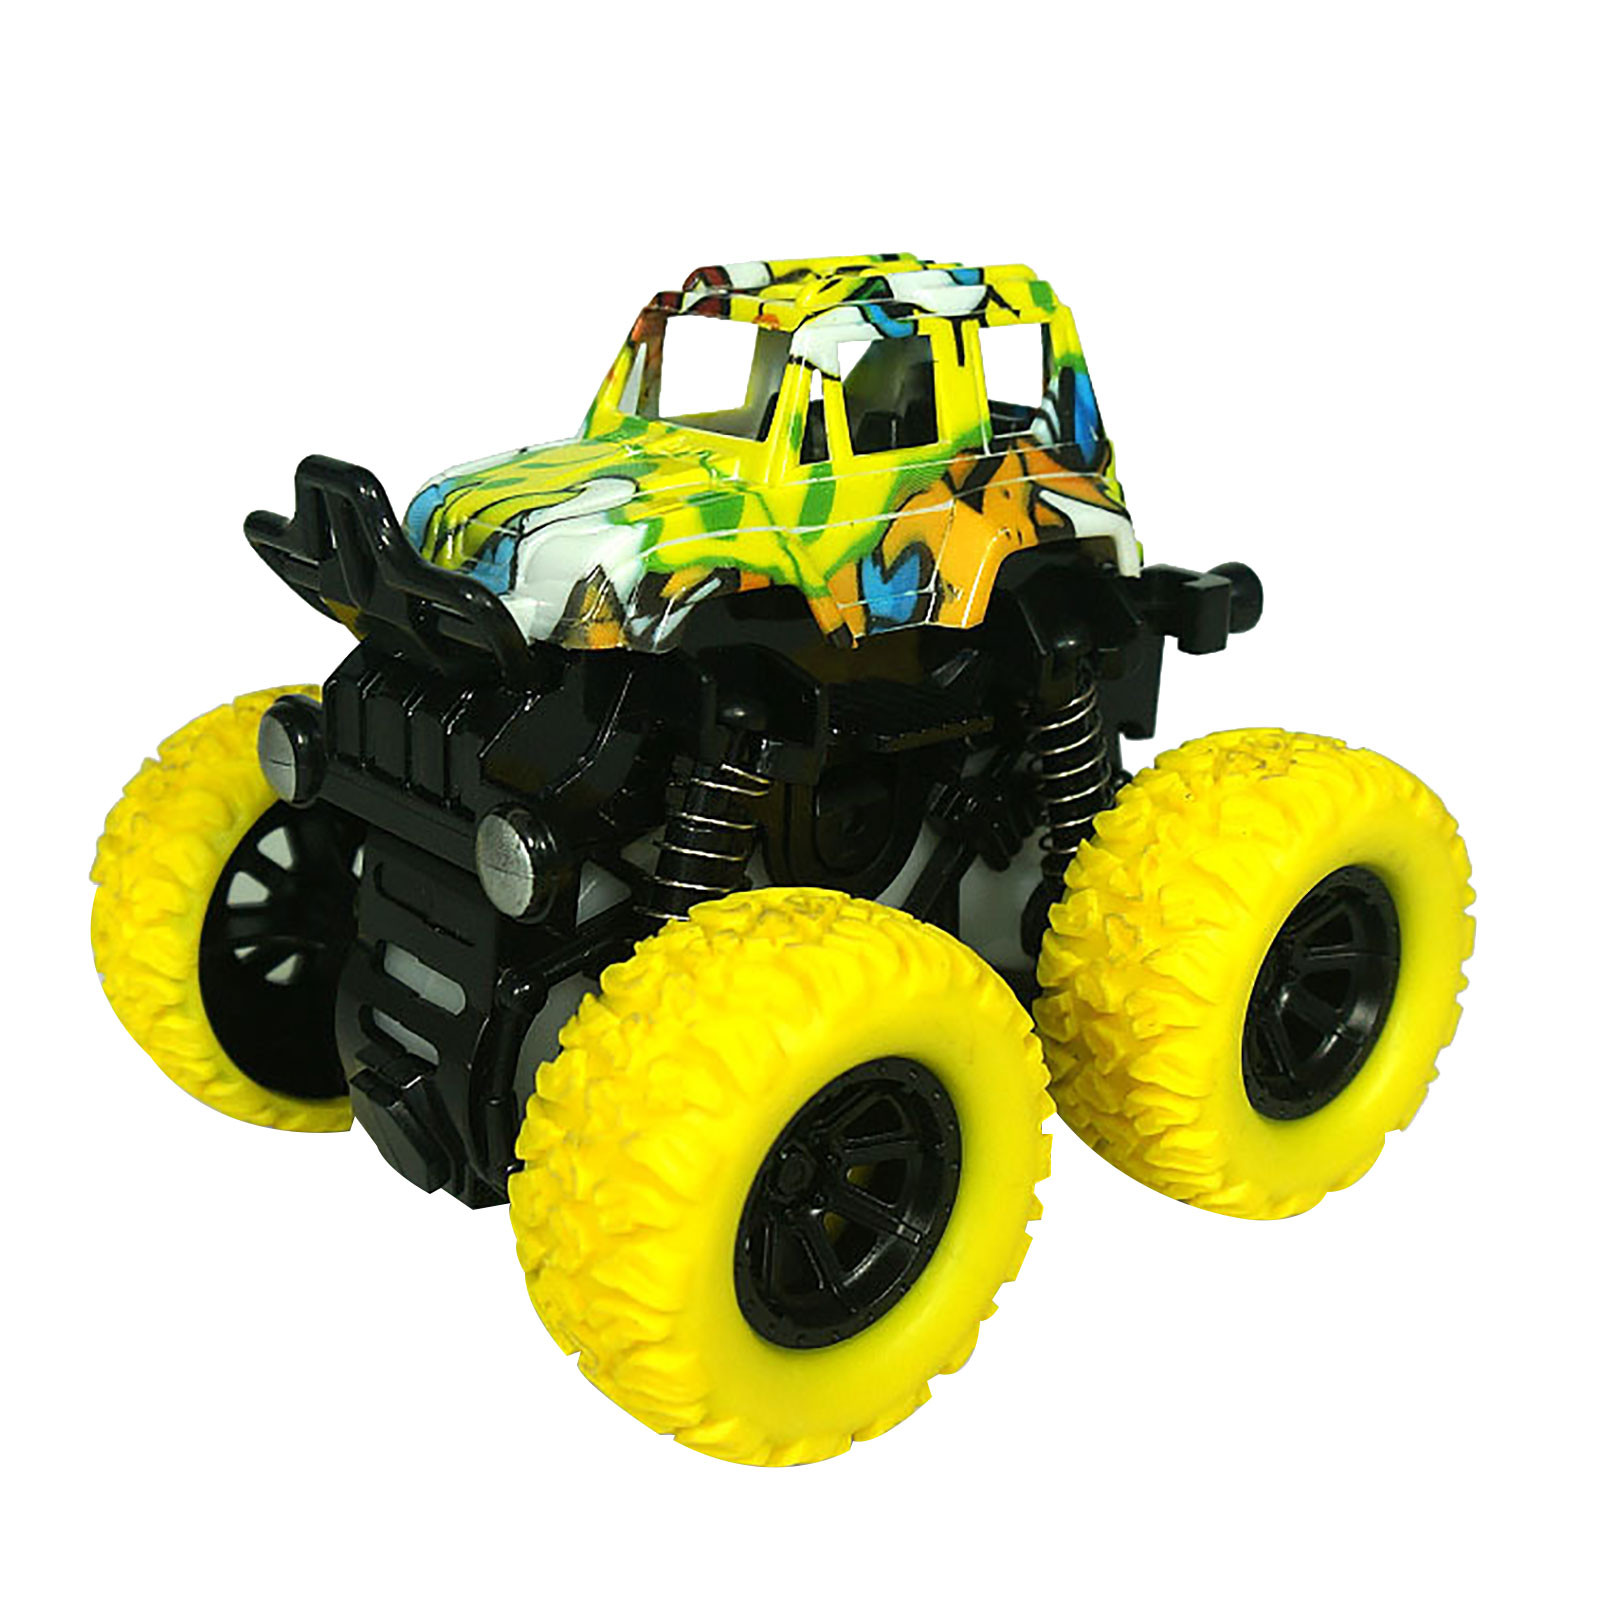 Kids Toys Inertia SUV Friction Power Truck Dynamic 360 Degrees Stunt Car 4WD Model Anti-skid Off-road Vehicle Boys Gift 2020